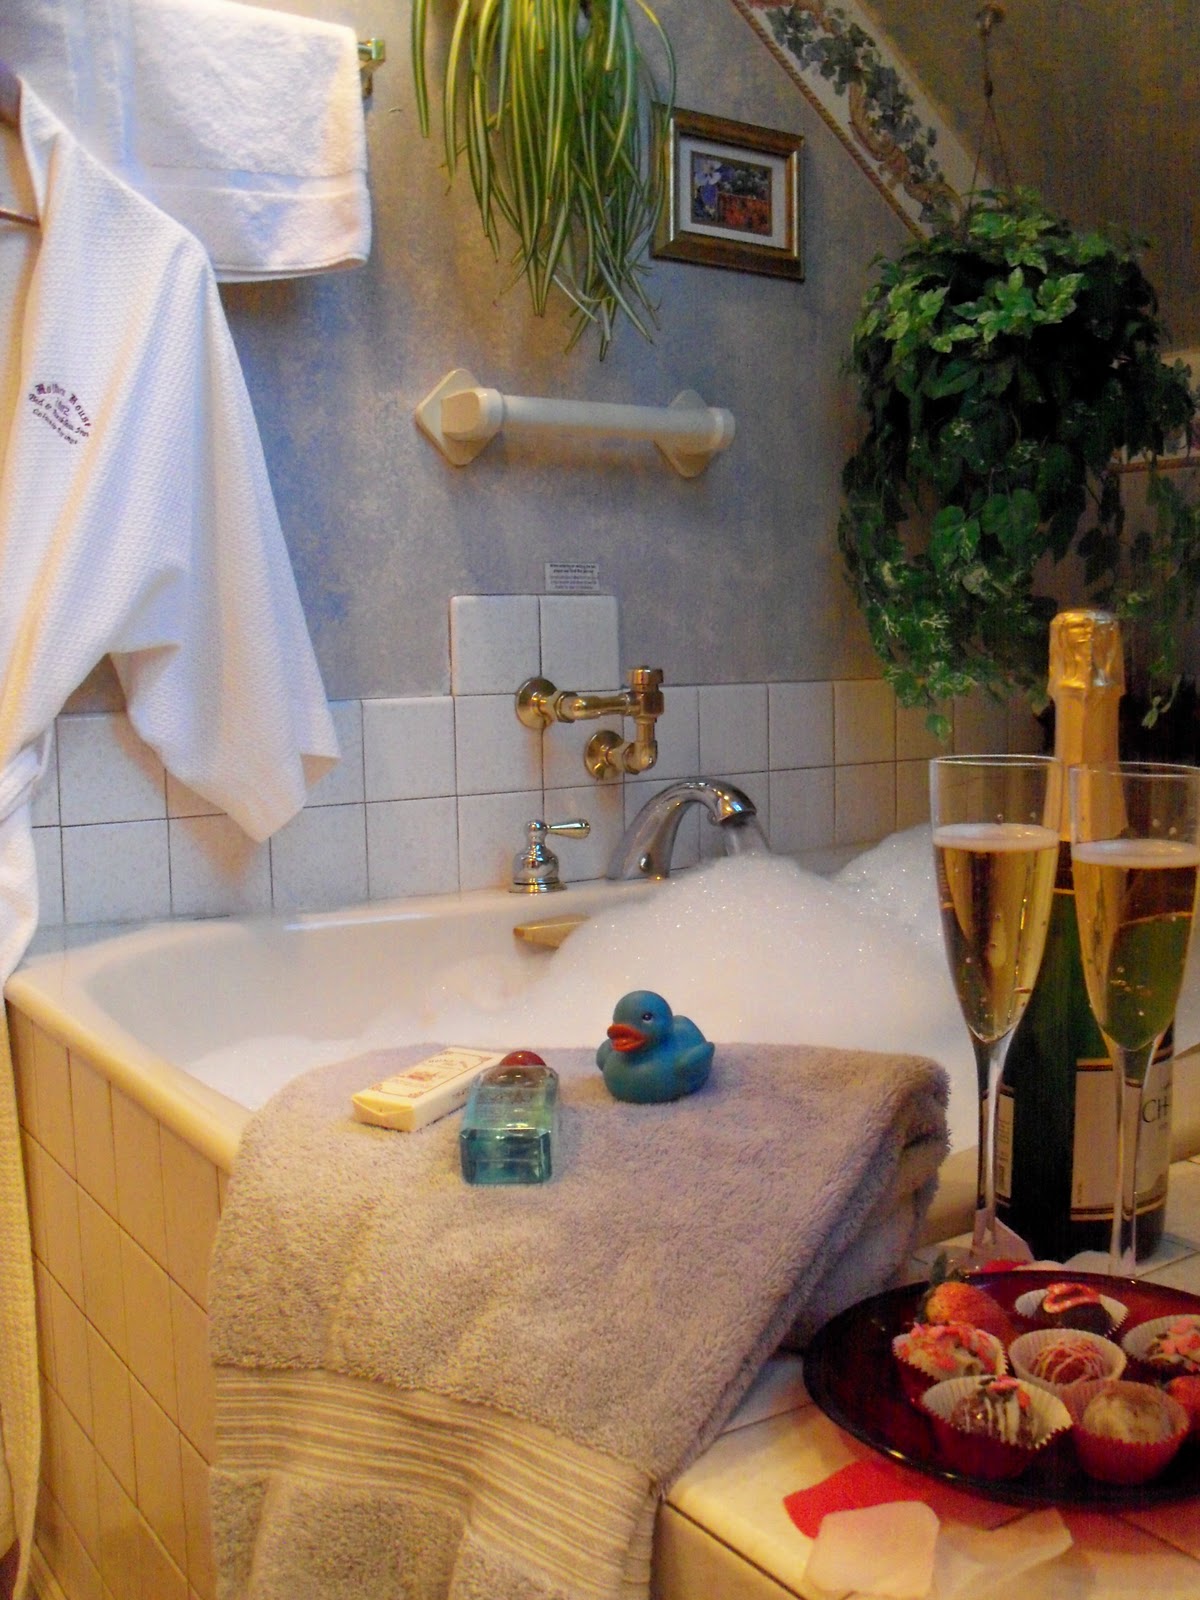 Aspen Bath with Truffles - Bed & breakfasts & inns of Colorado Association